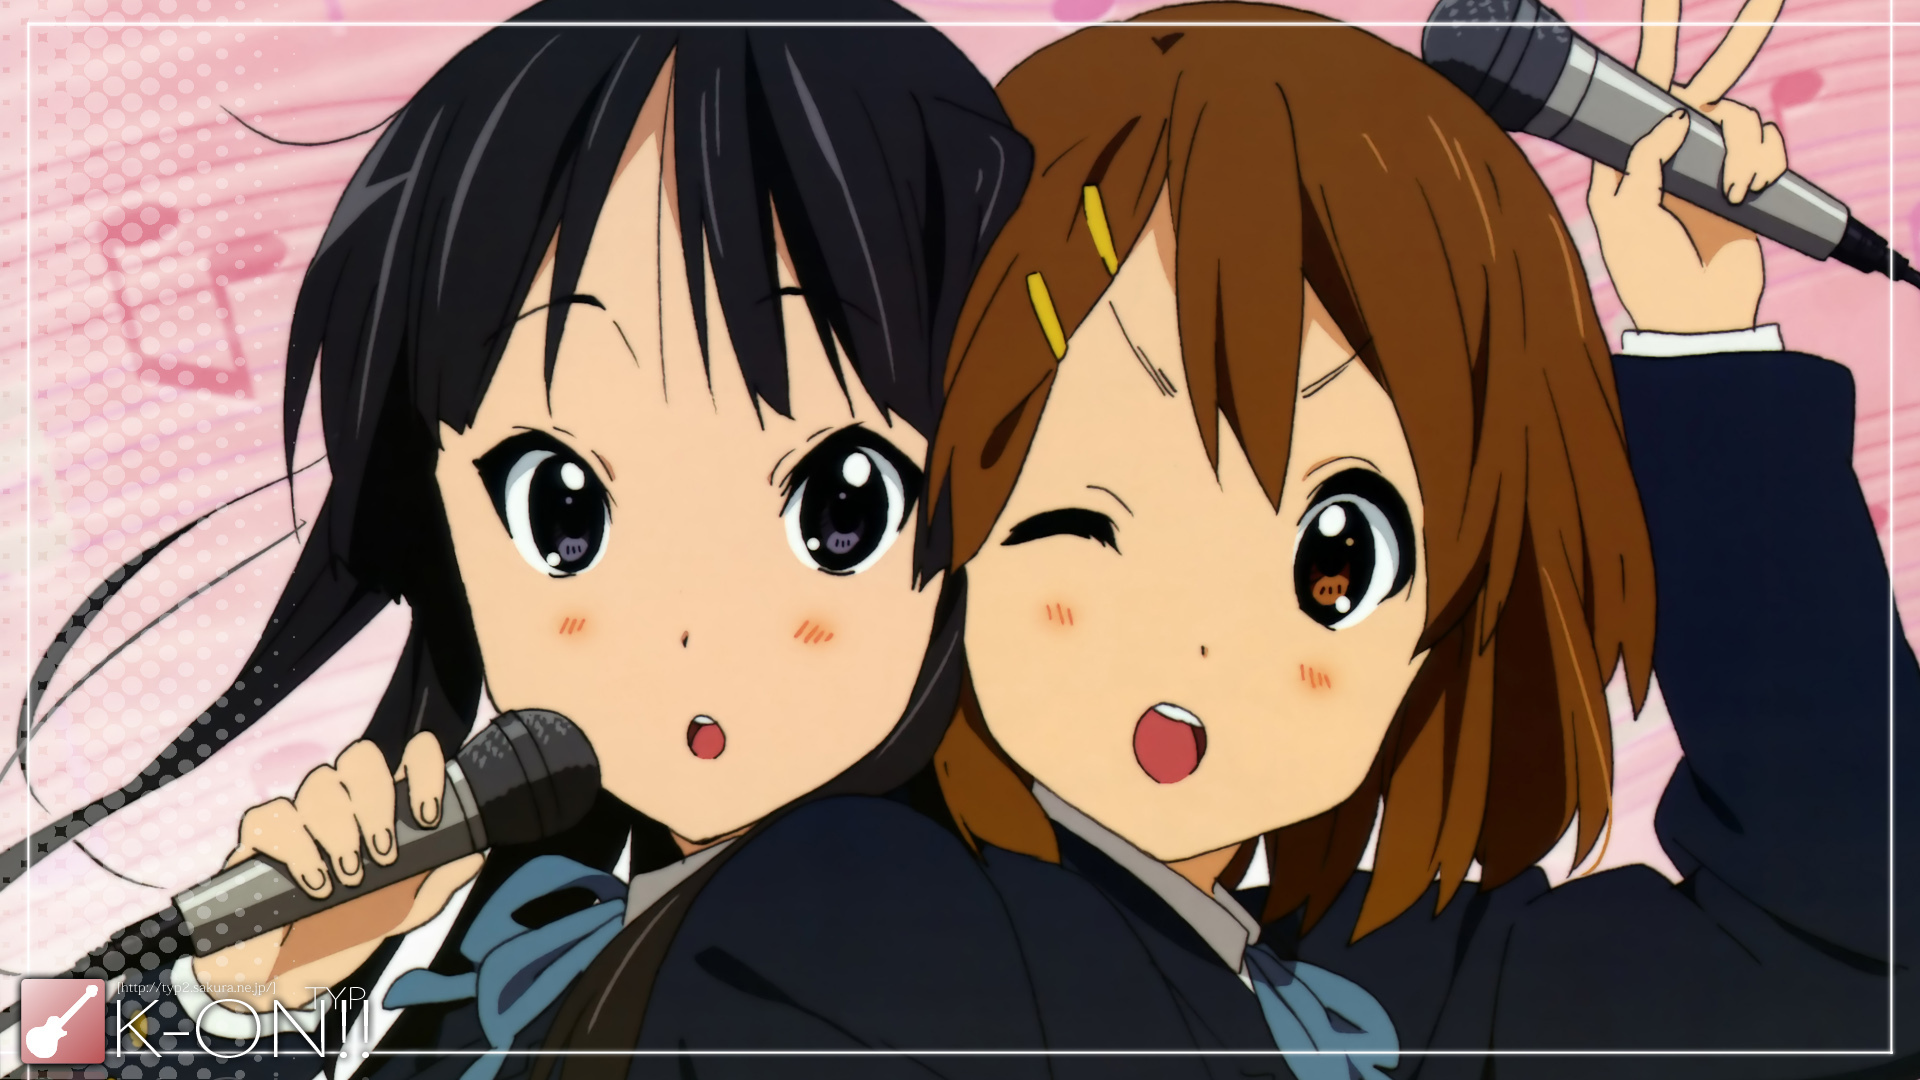 On Wallpaper HD Anime Girls Puter Desktop